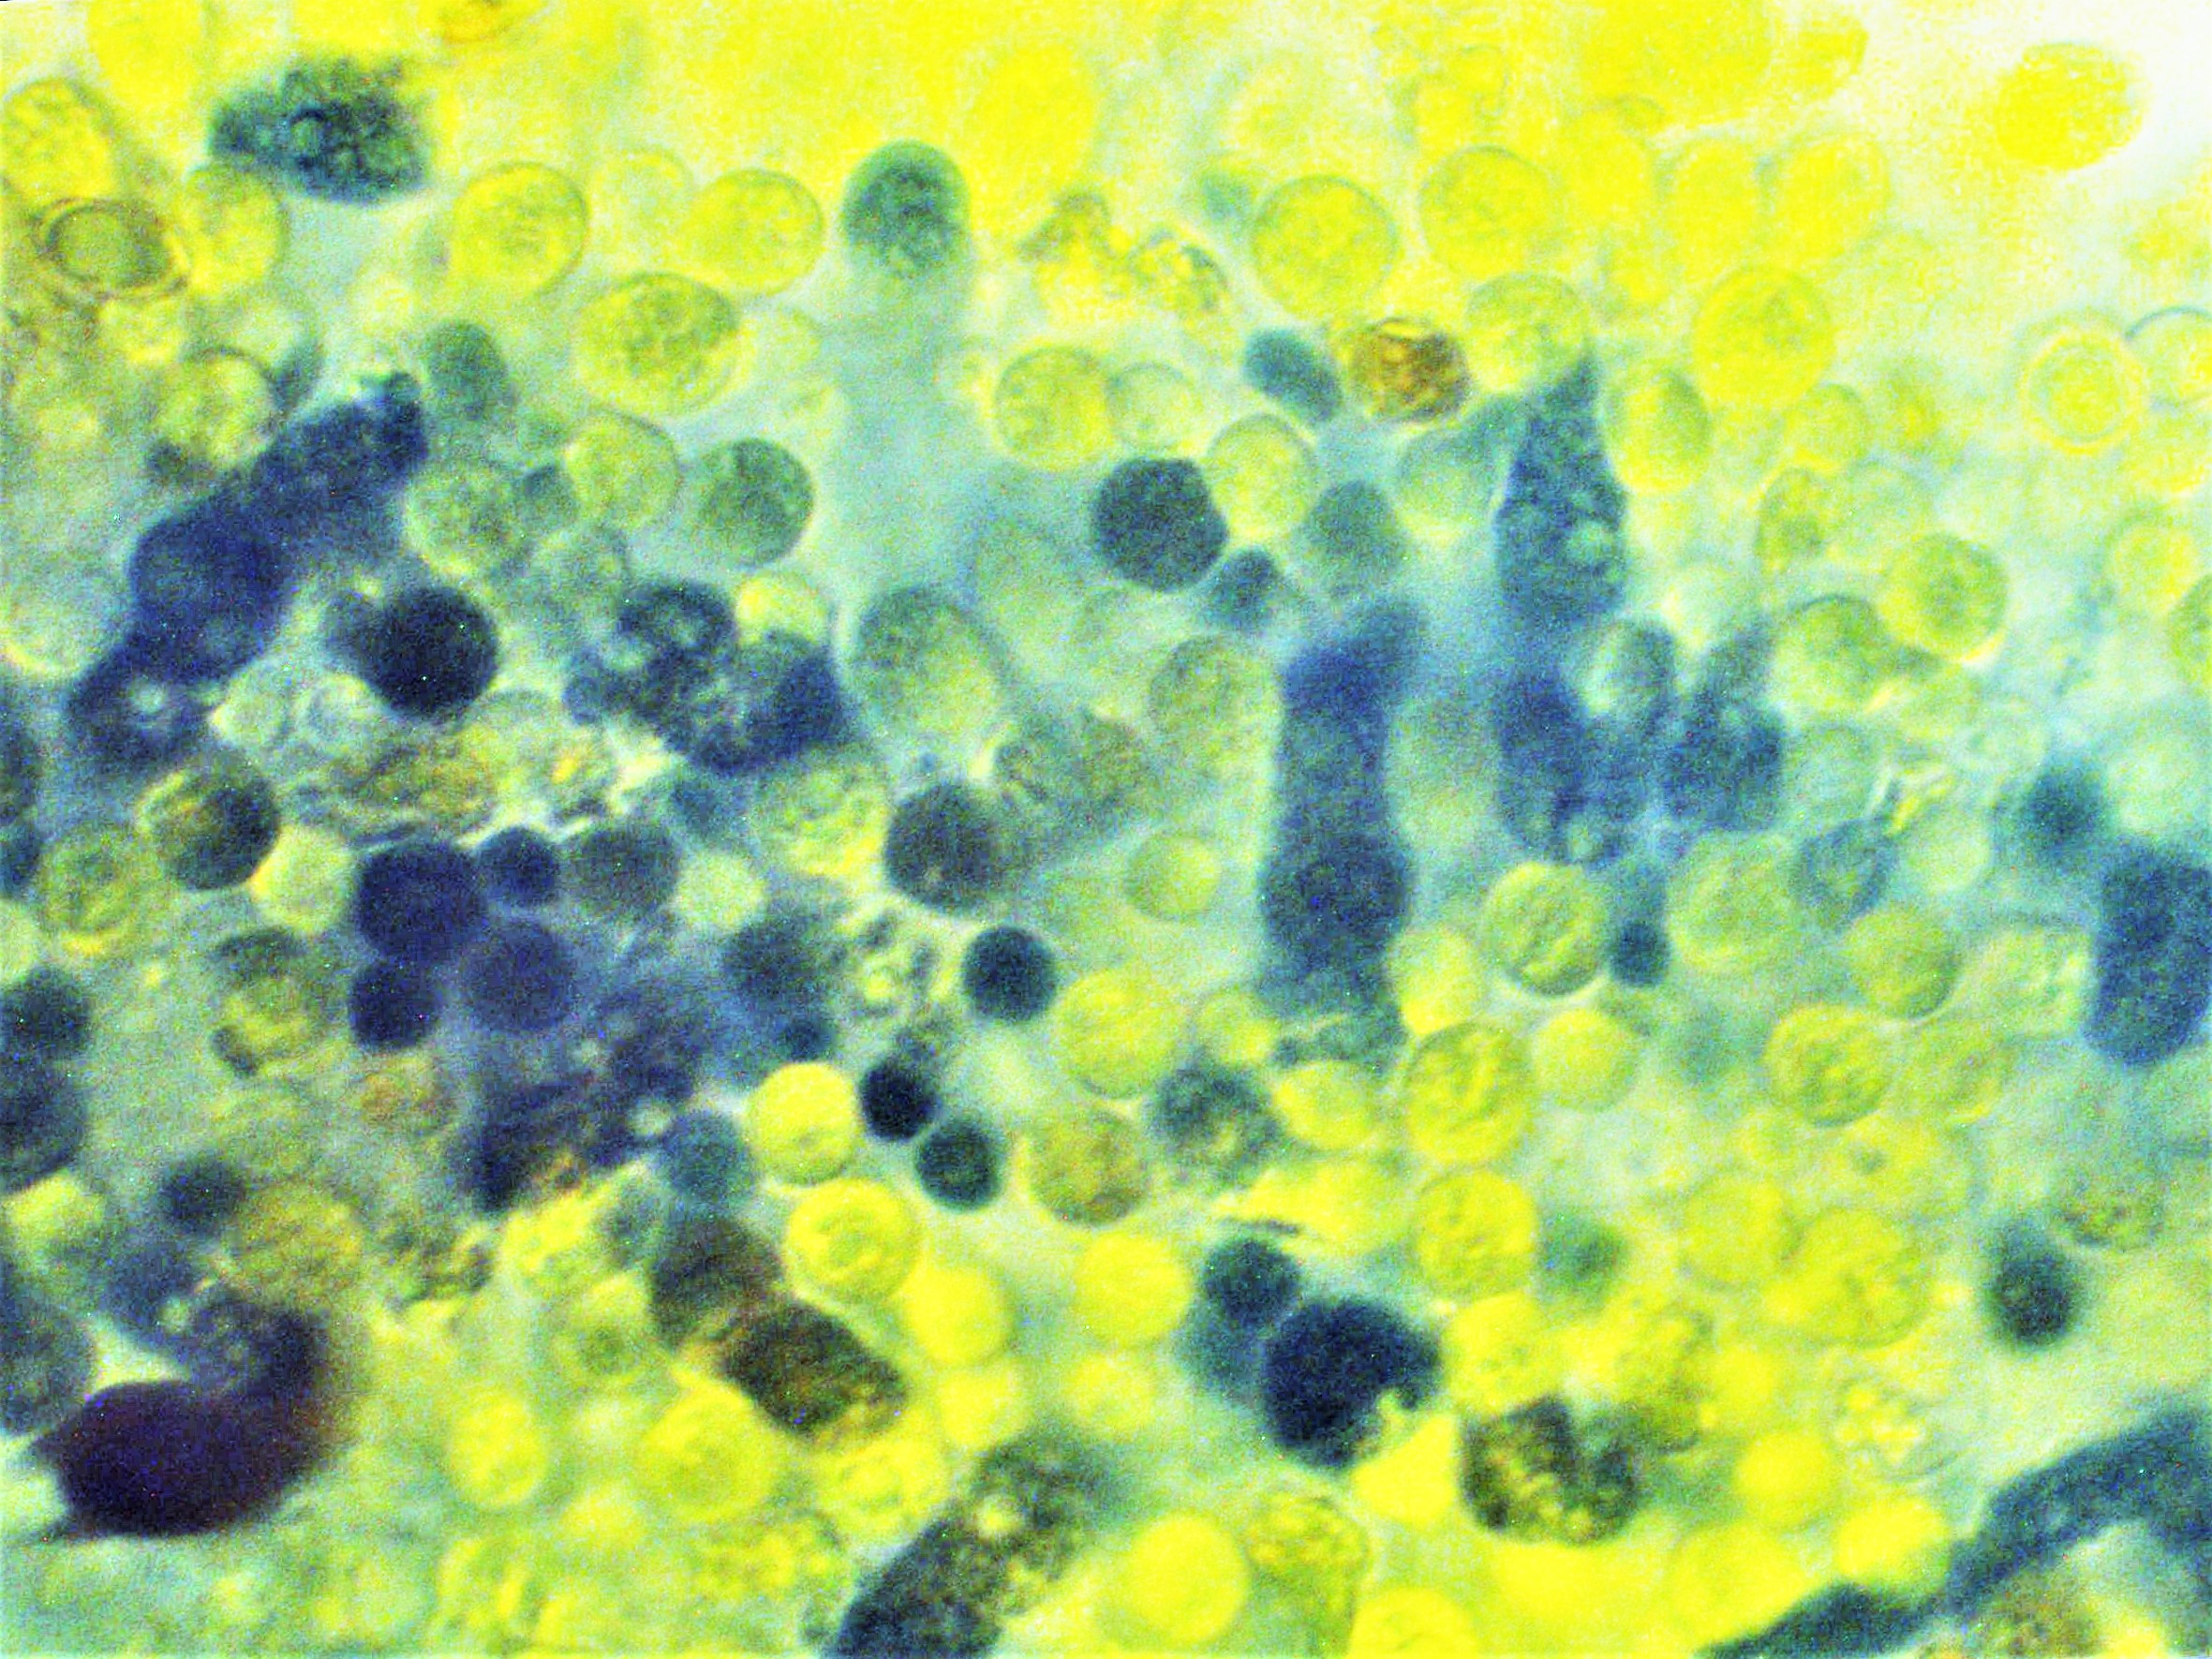 Hebeloma nigellum 8 mesophaeum Dunkelscheibiger Faelbling Italien Ligurien Basidien amyloid lebend vital Chloralhydrat toxisch letal Krieglsteiner Mikroskopierkurs